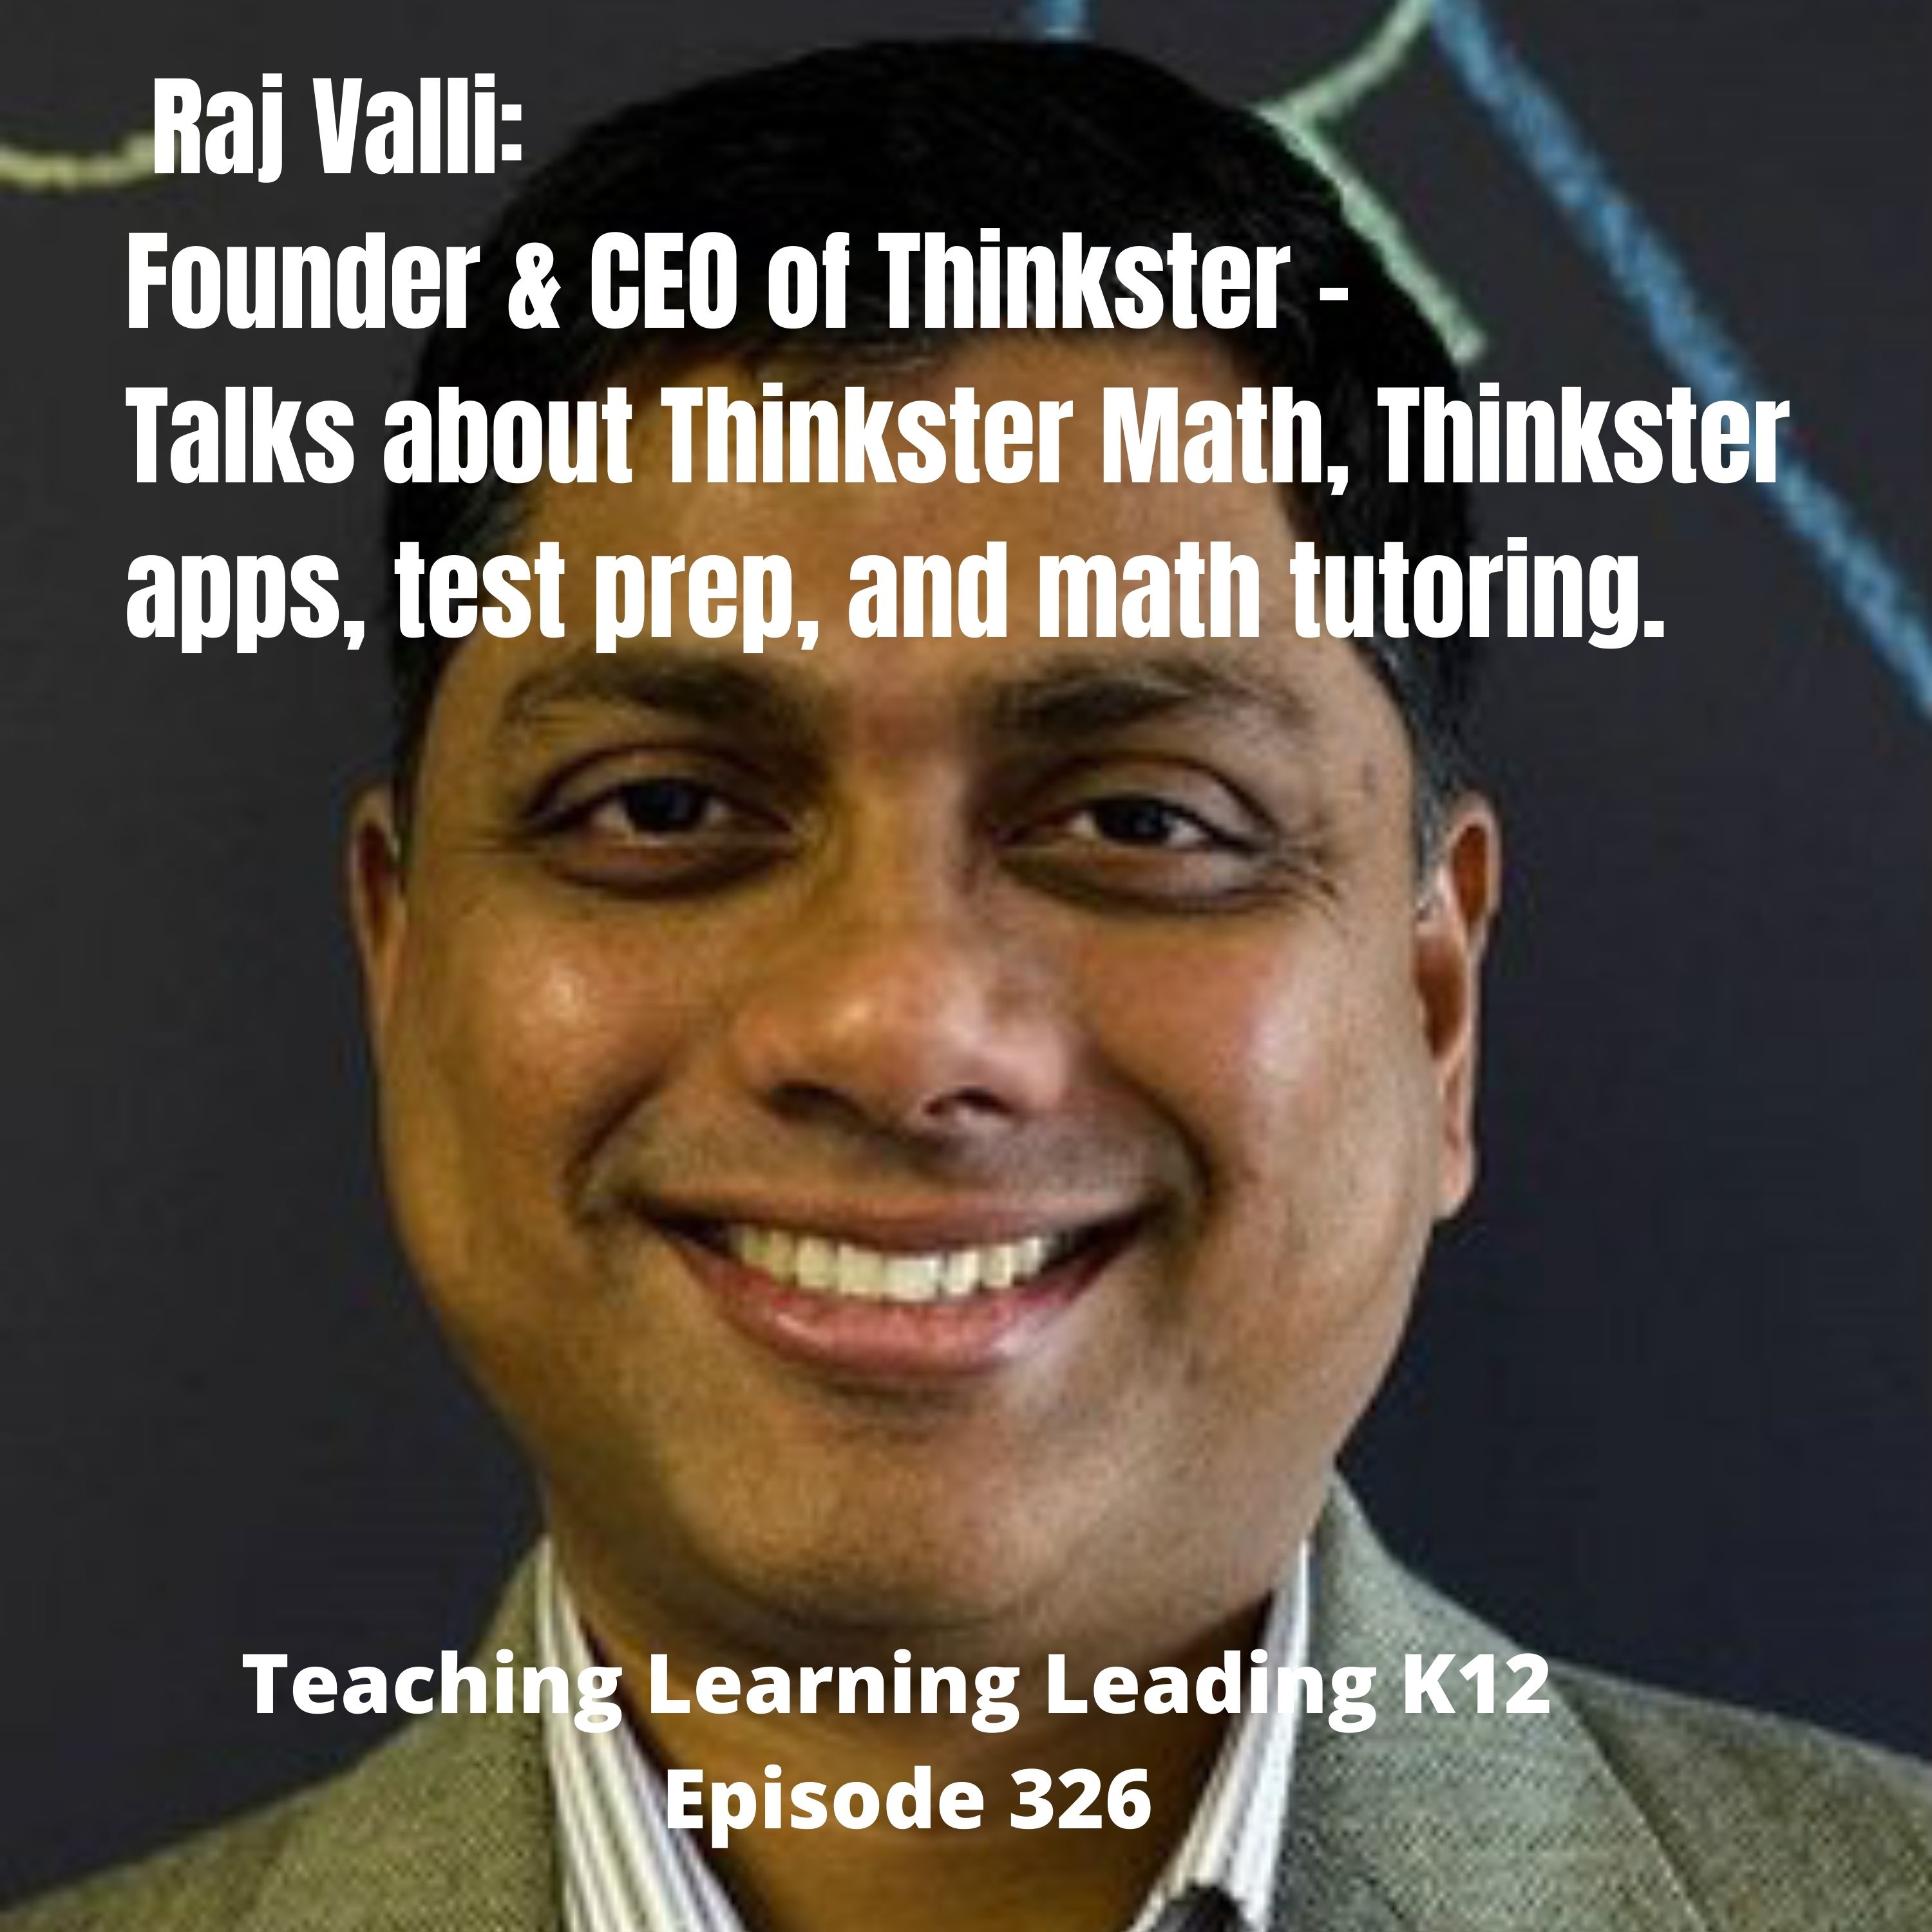 Raj Valli: Founder & CEO of Thinkster - 326 Image